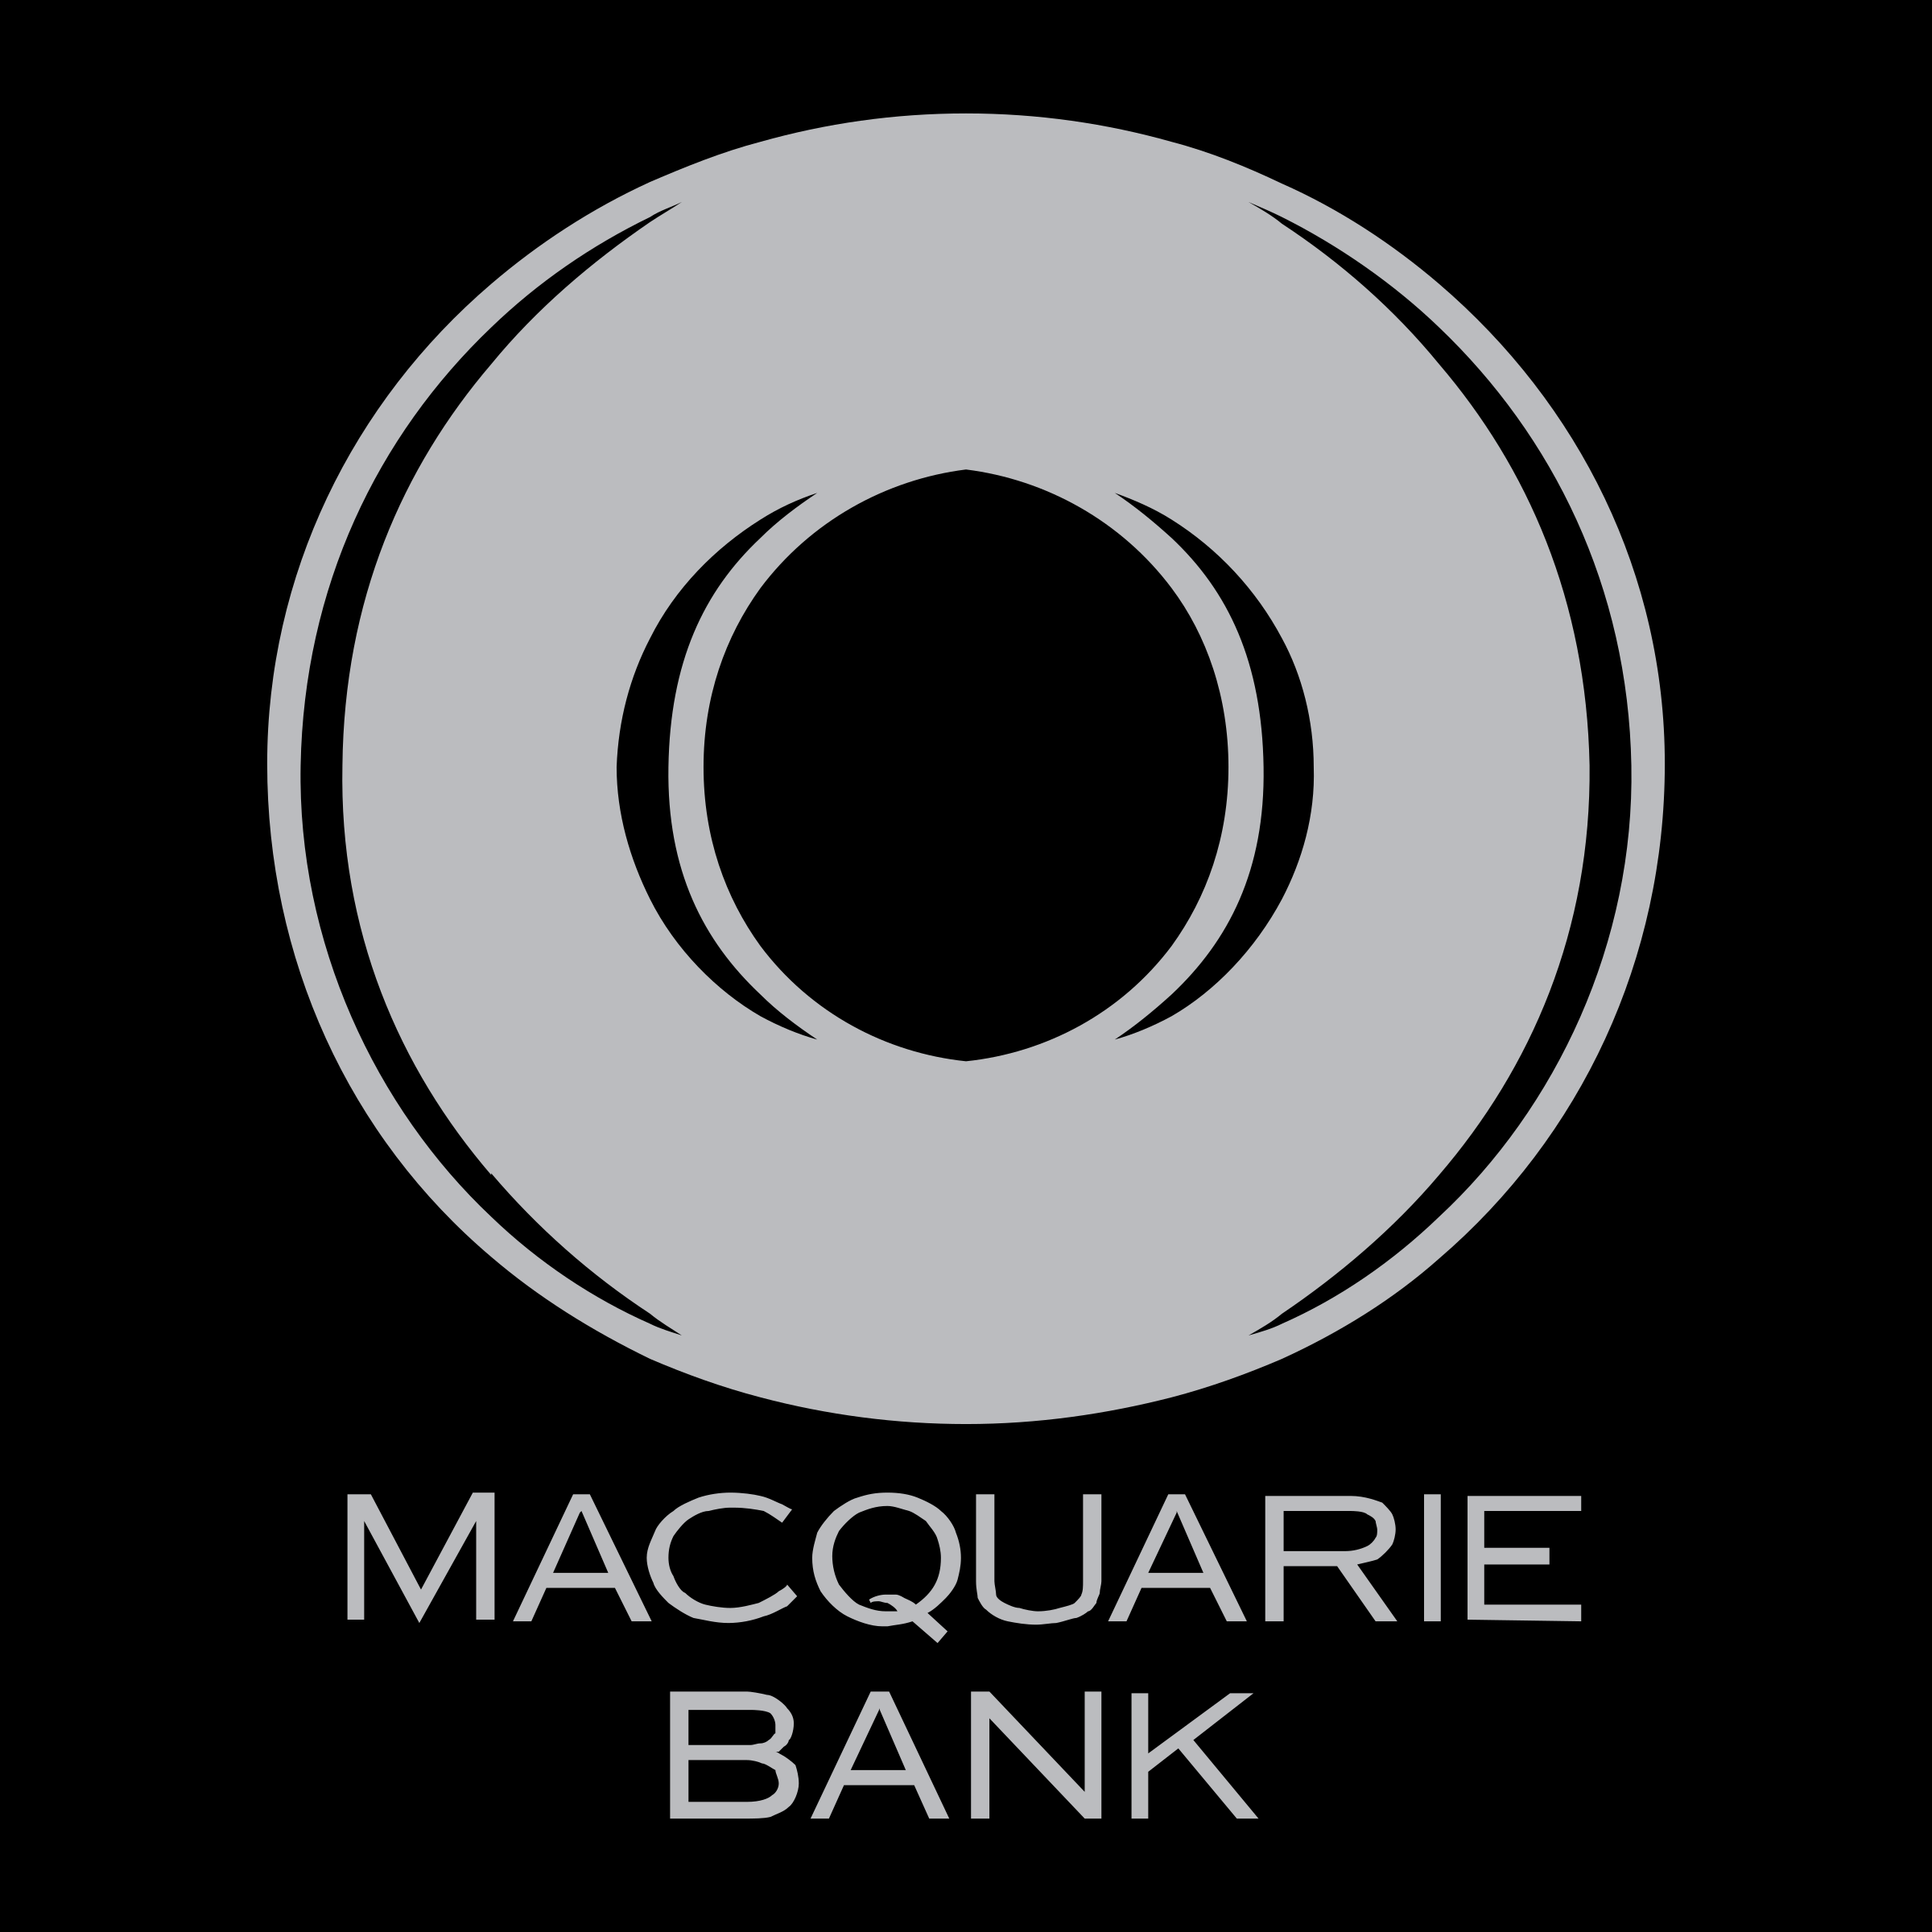 Macquarie Logo - Macquarie Bank Limited Logo PNG Transparent & SVG Vector